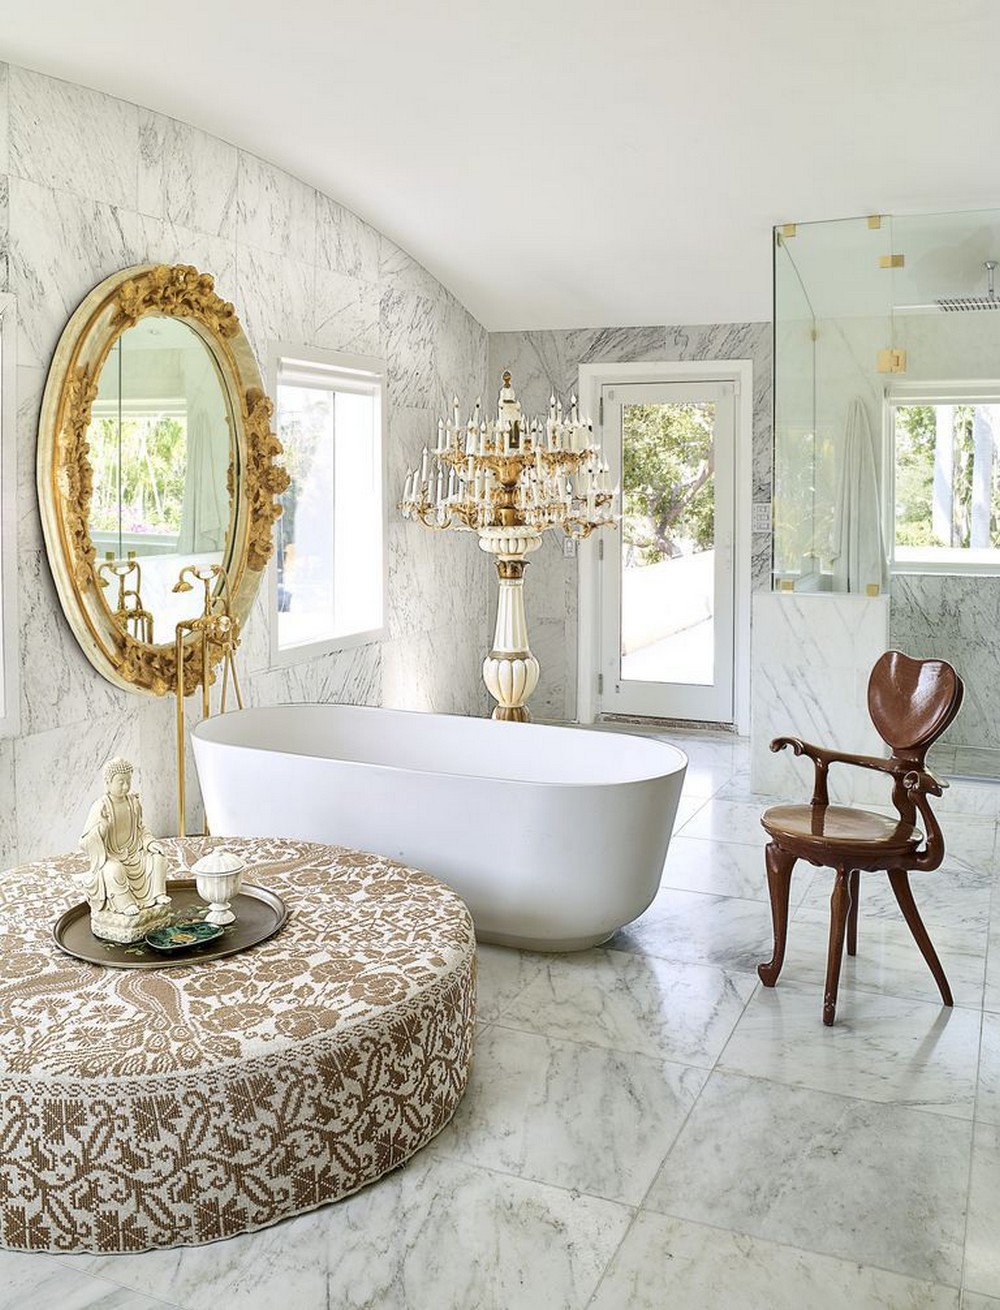 Elle Decor's Hot List For The Ultimate Luxury Bathroom